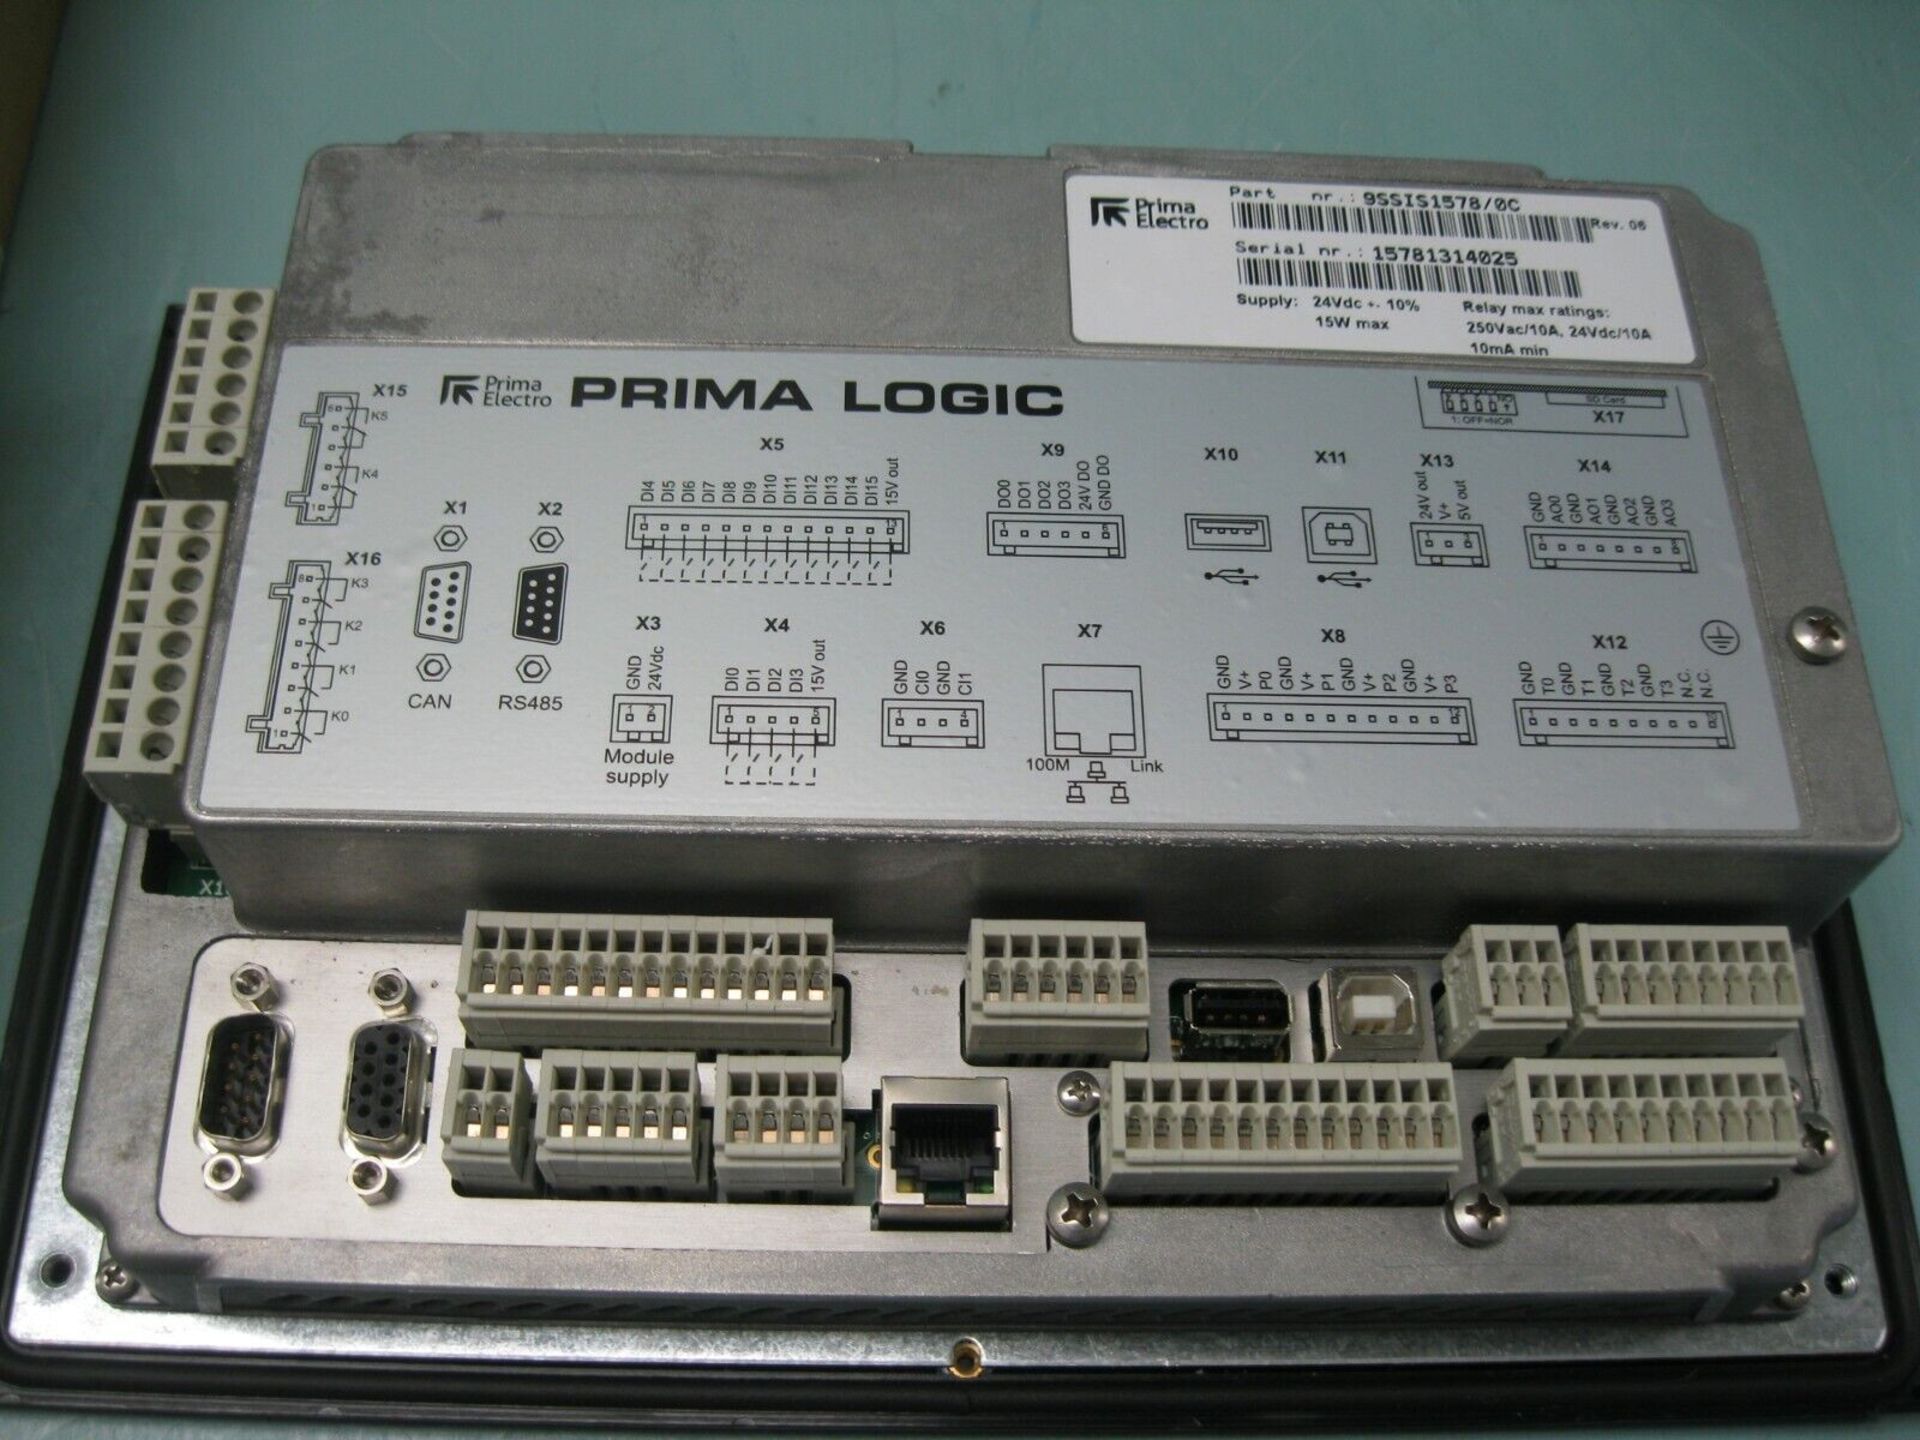 Lot of (4) Prima Electro 9SSIS1578/0C Prima Logic Operator Control Panel NEW (Located Springfield, - Image 3 of 4